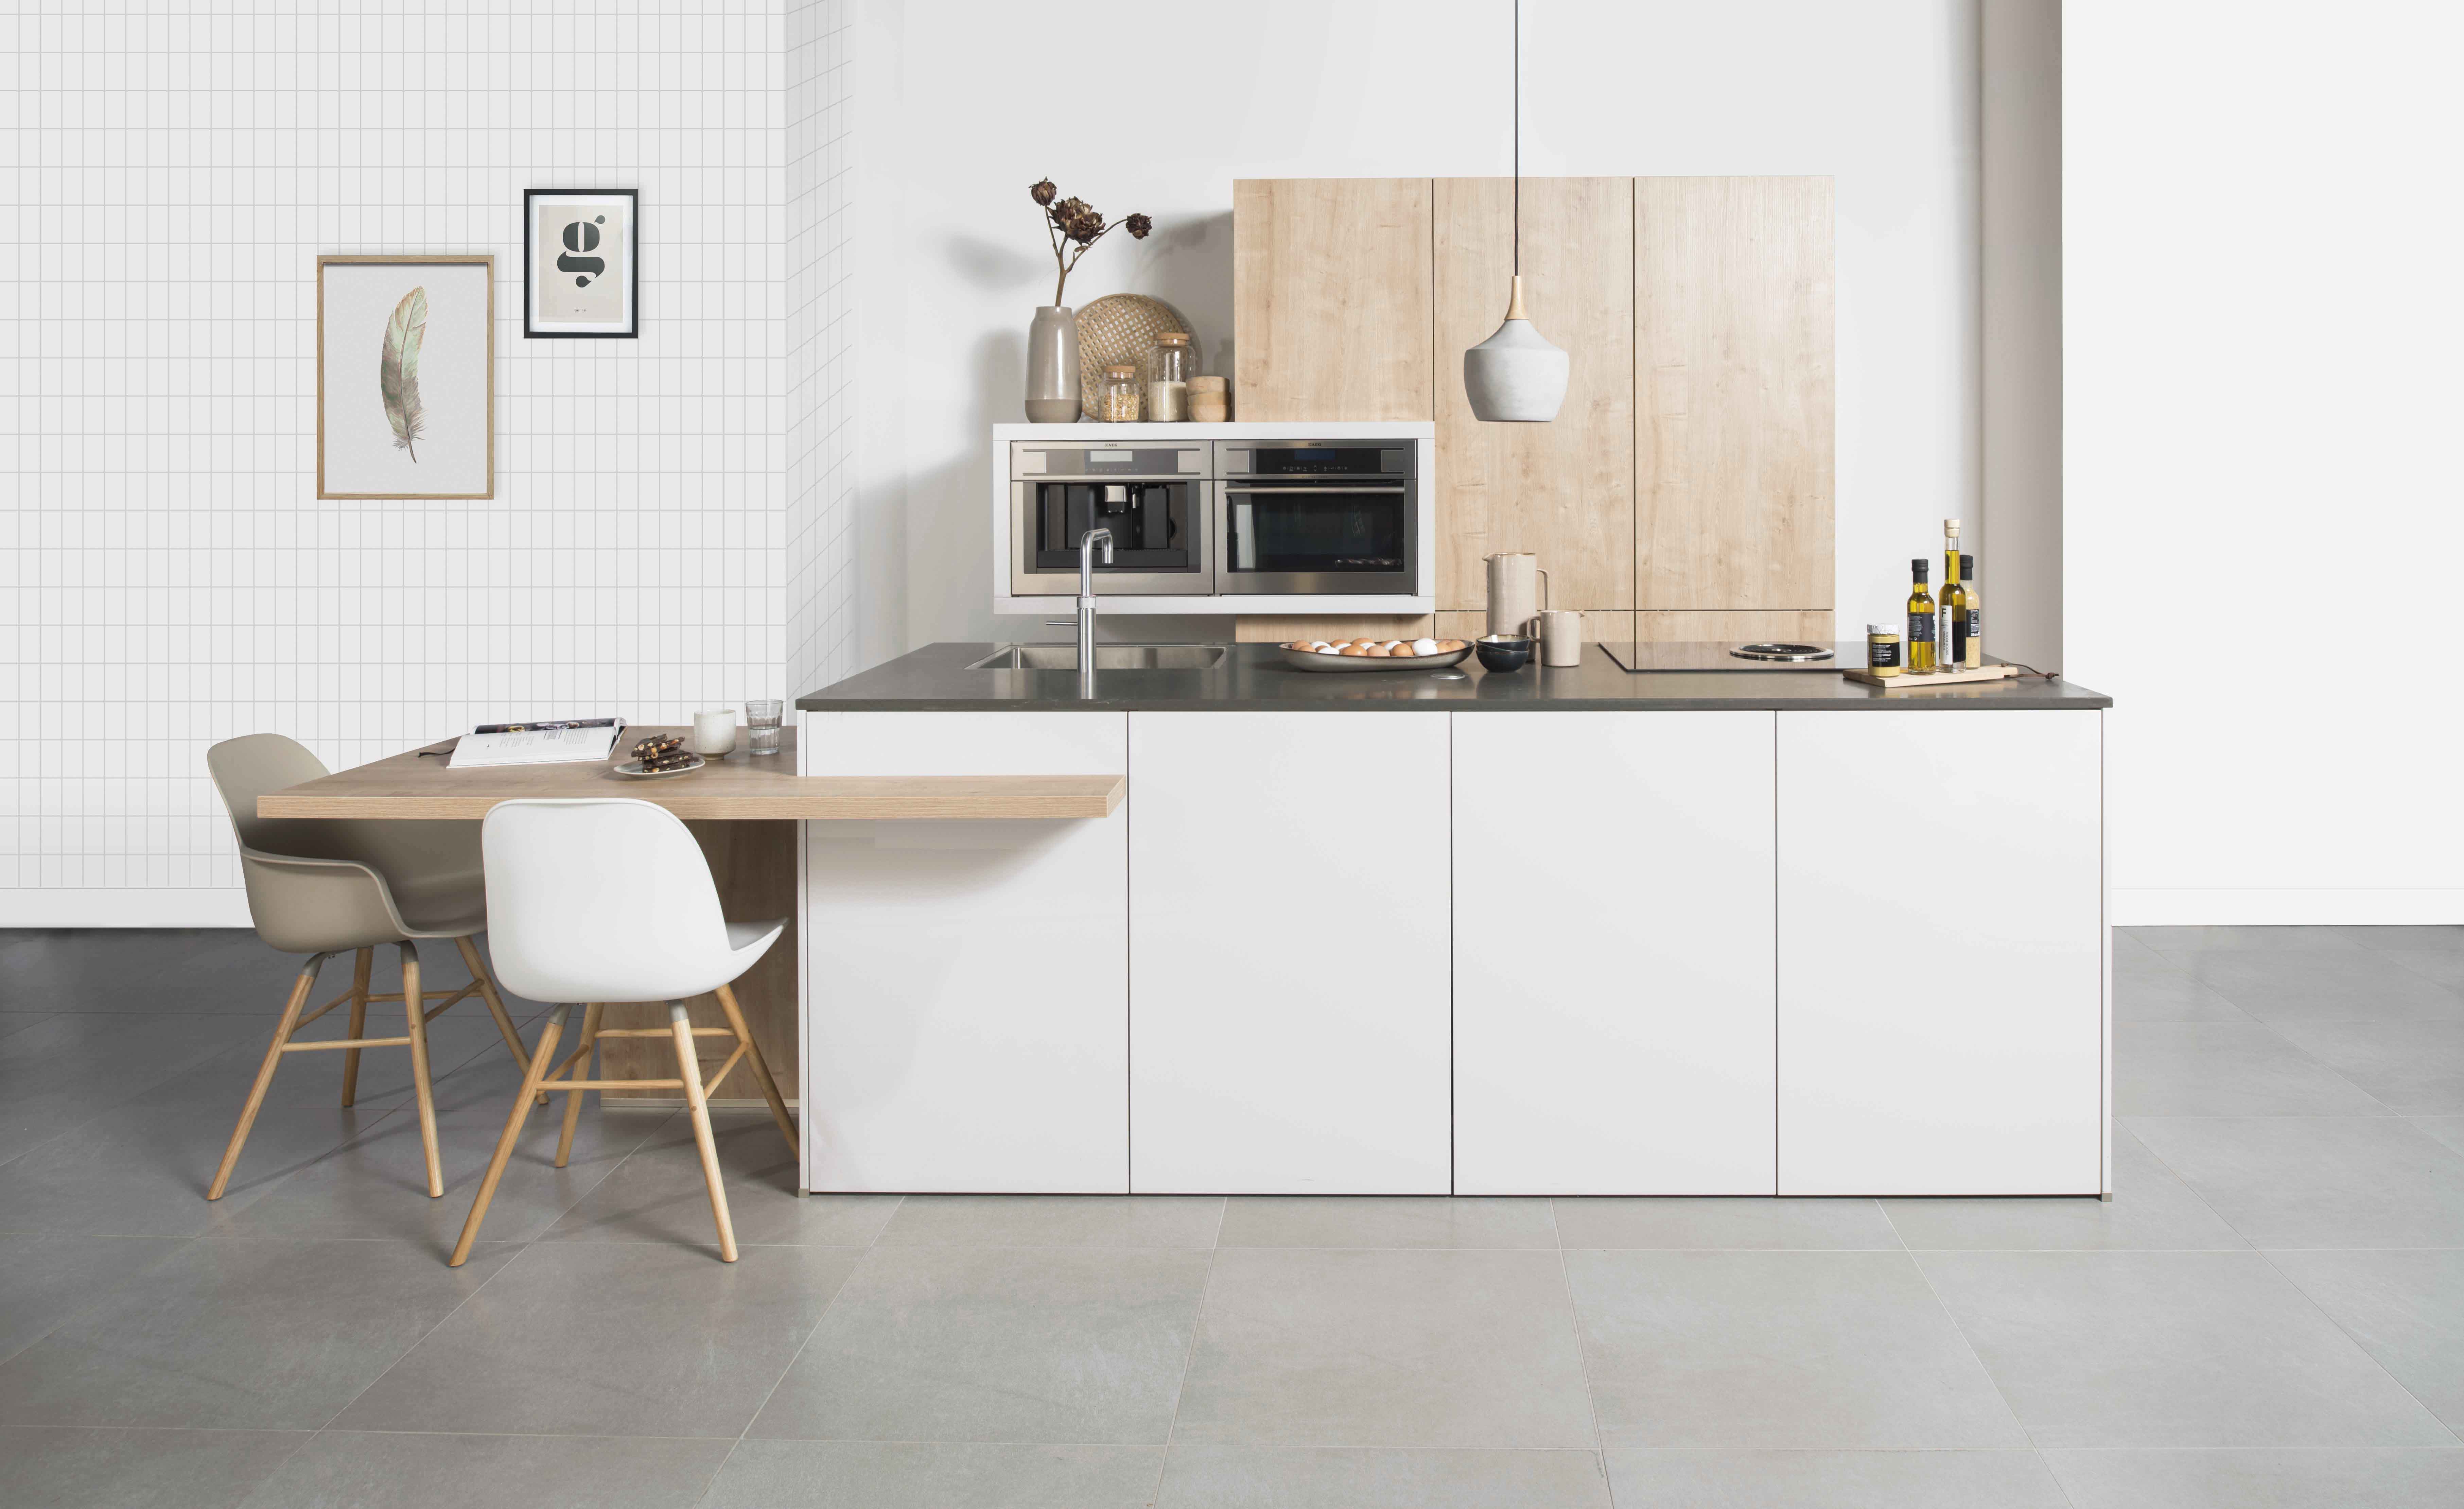 litteken Picasso Druppelen Witte keukens met hout | Grando Keukens